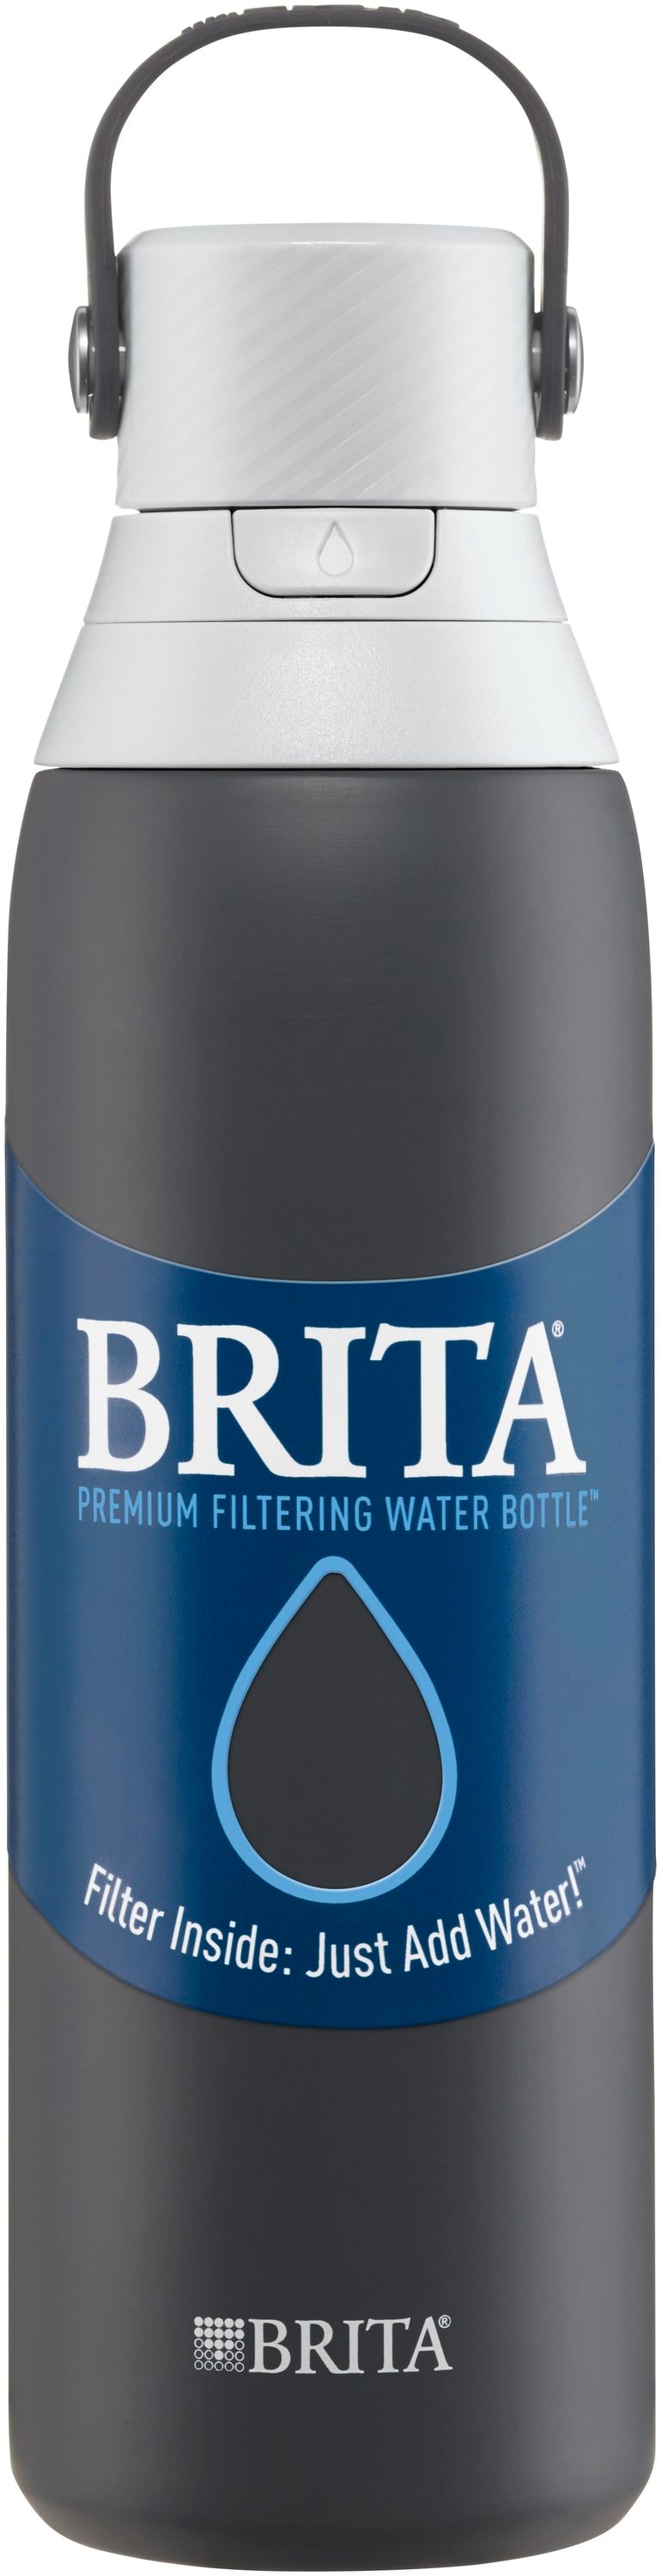 Brita Stainless Steel Water Bottle - Gray (636447CDN1) for sale online